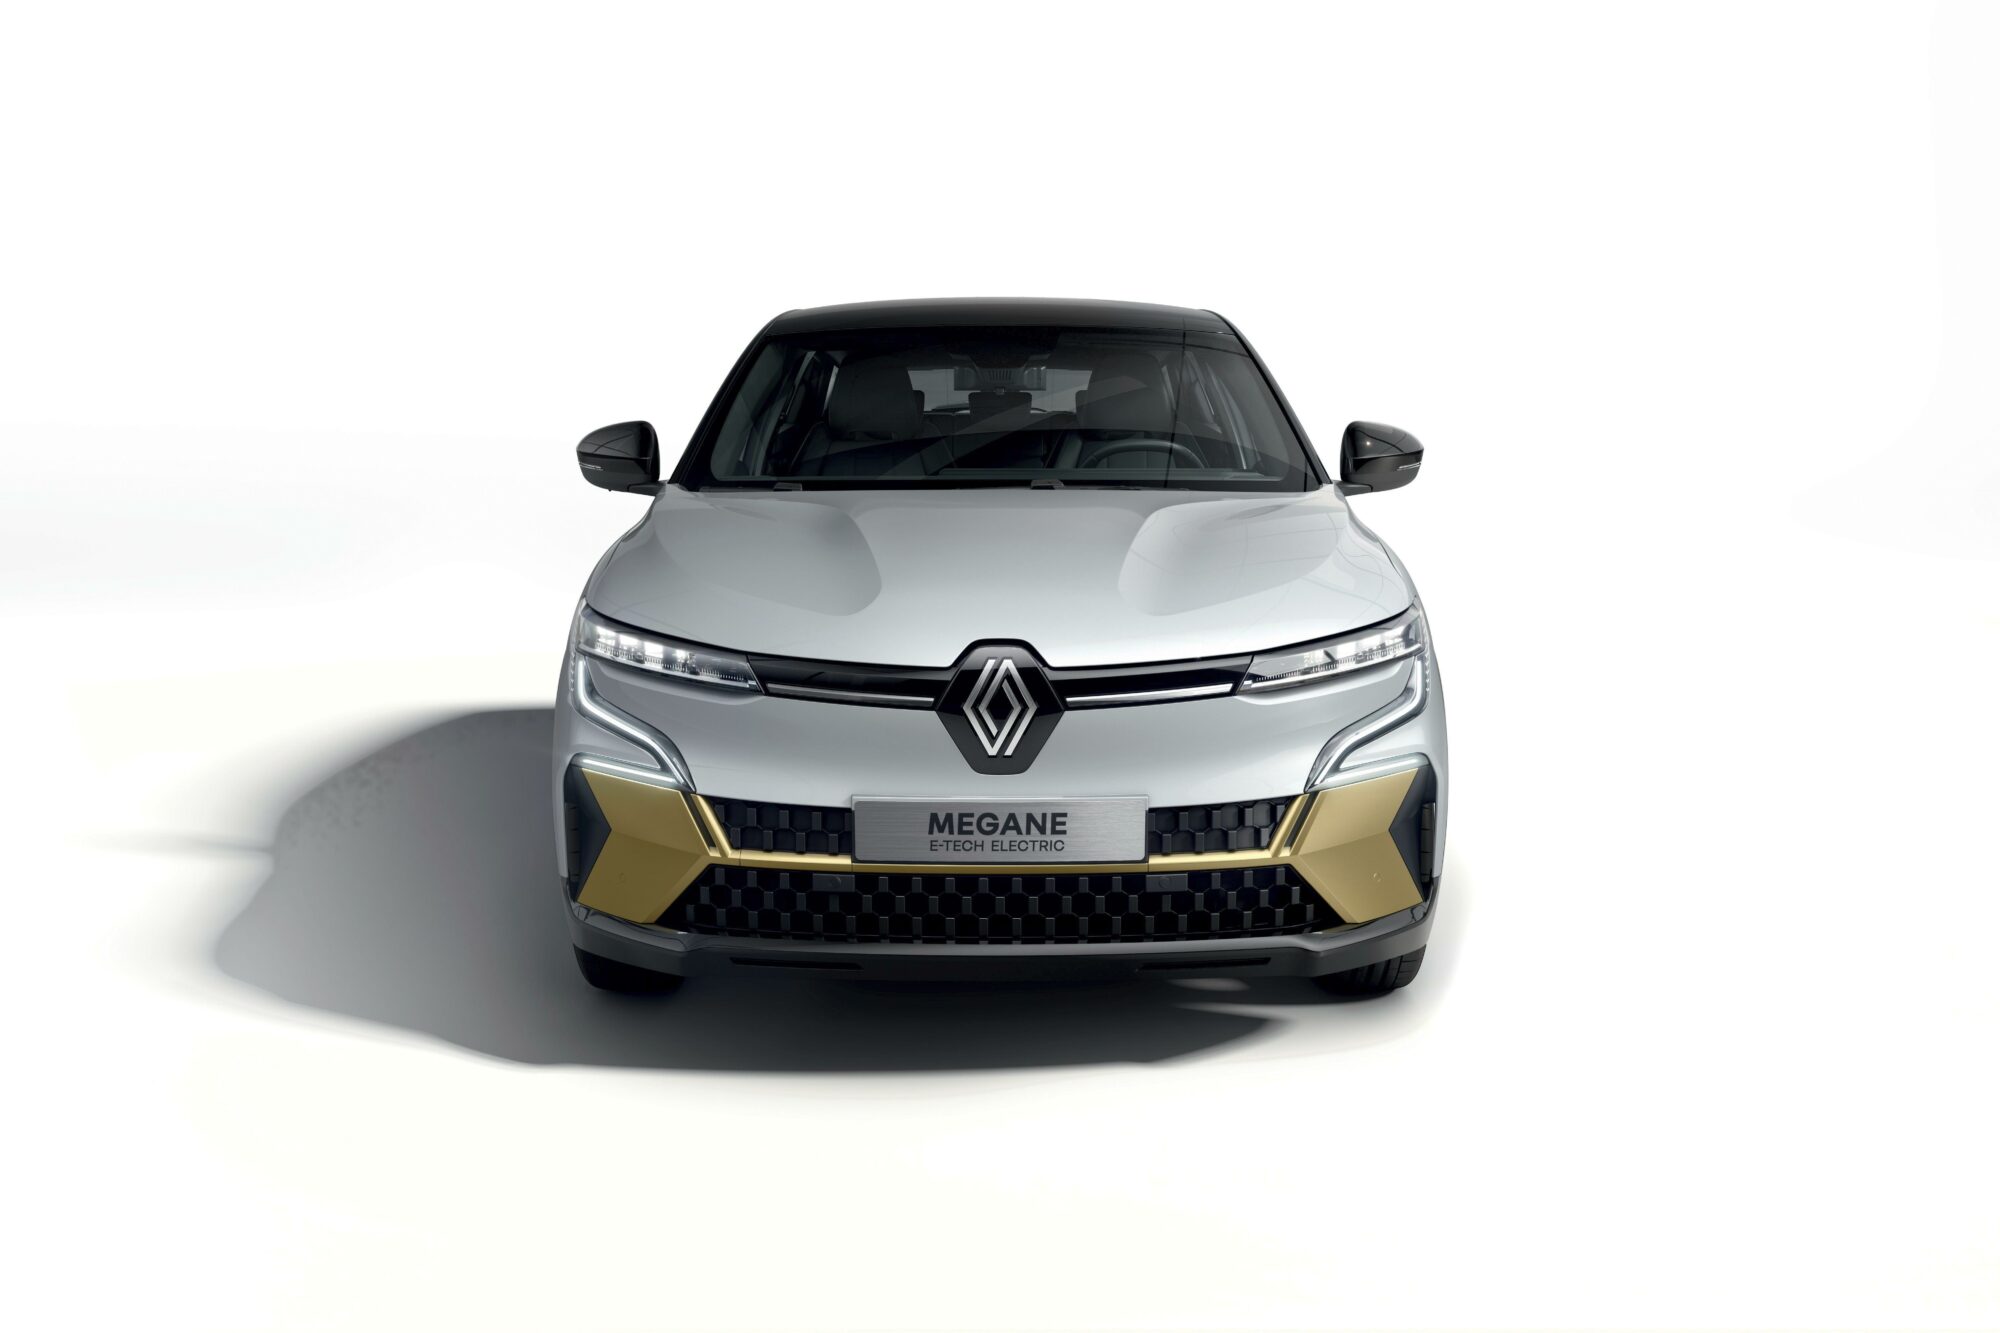 2021 - New Renault Mégane E-TECH Electric - Studio